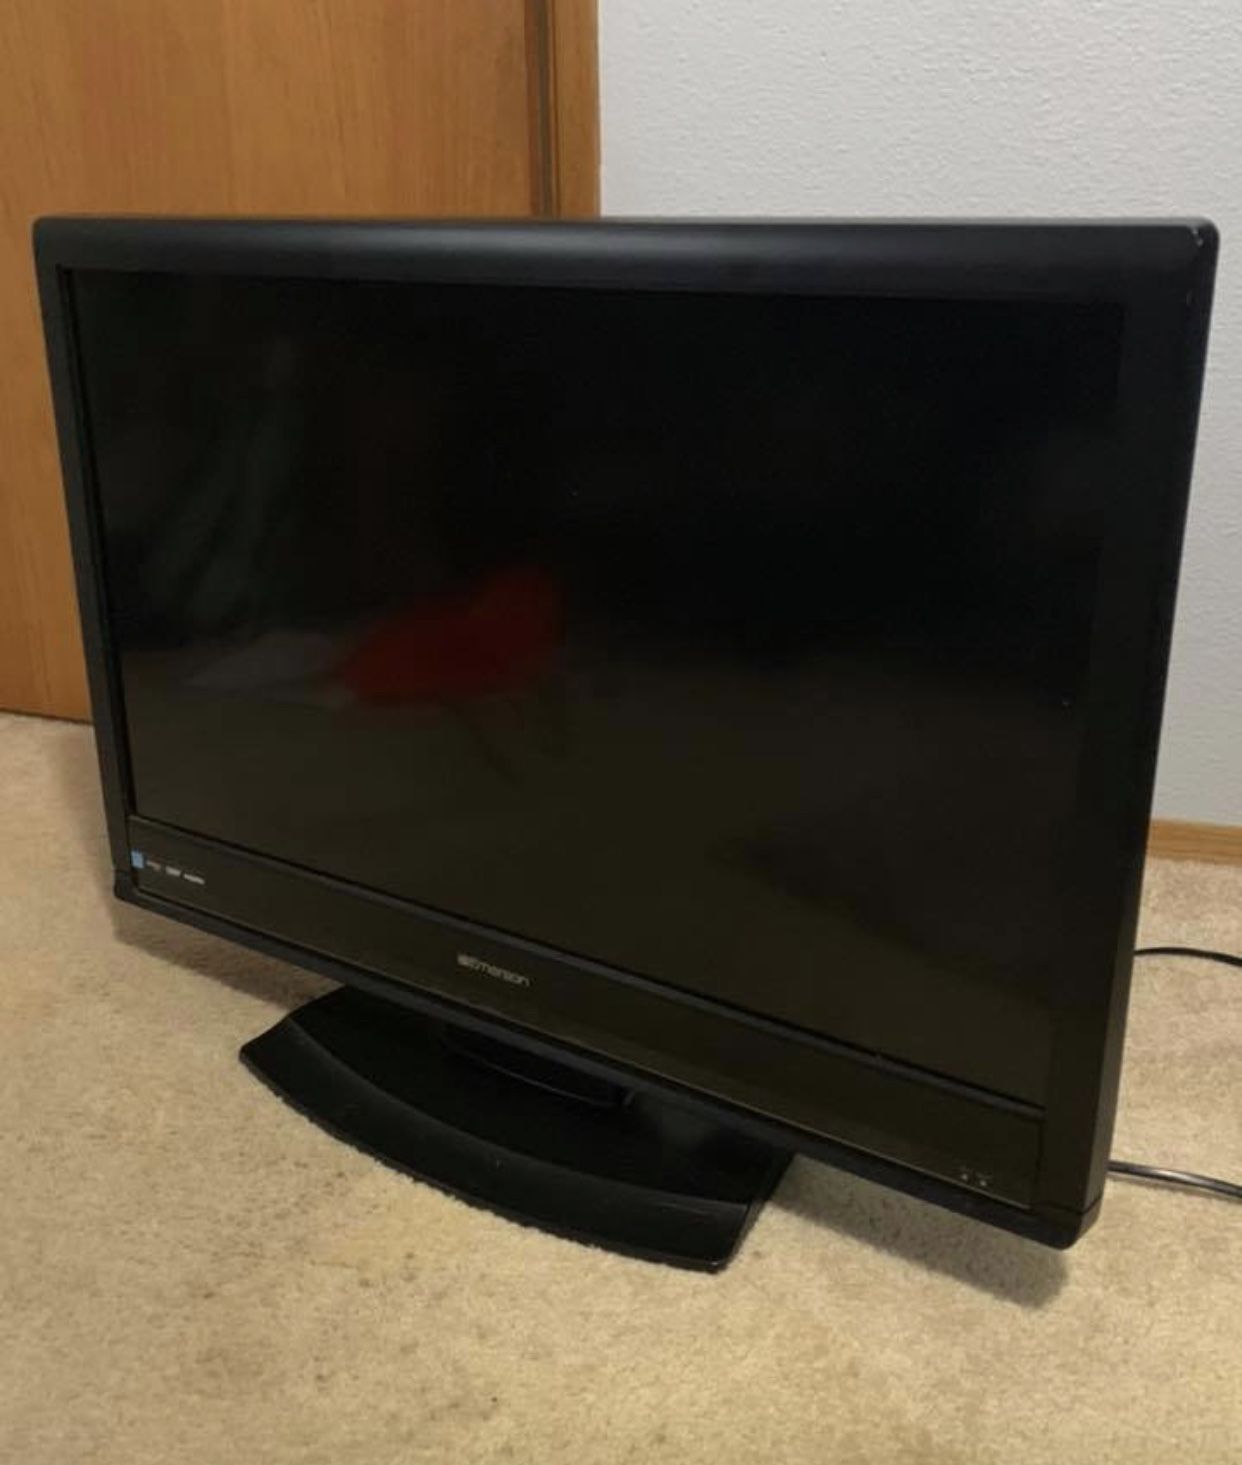 Emerson 32 inch flat screen TV